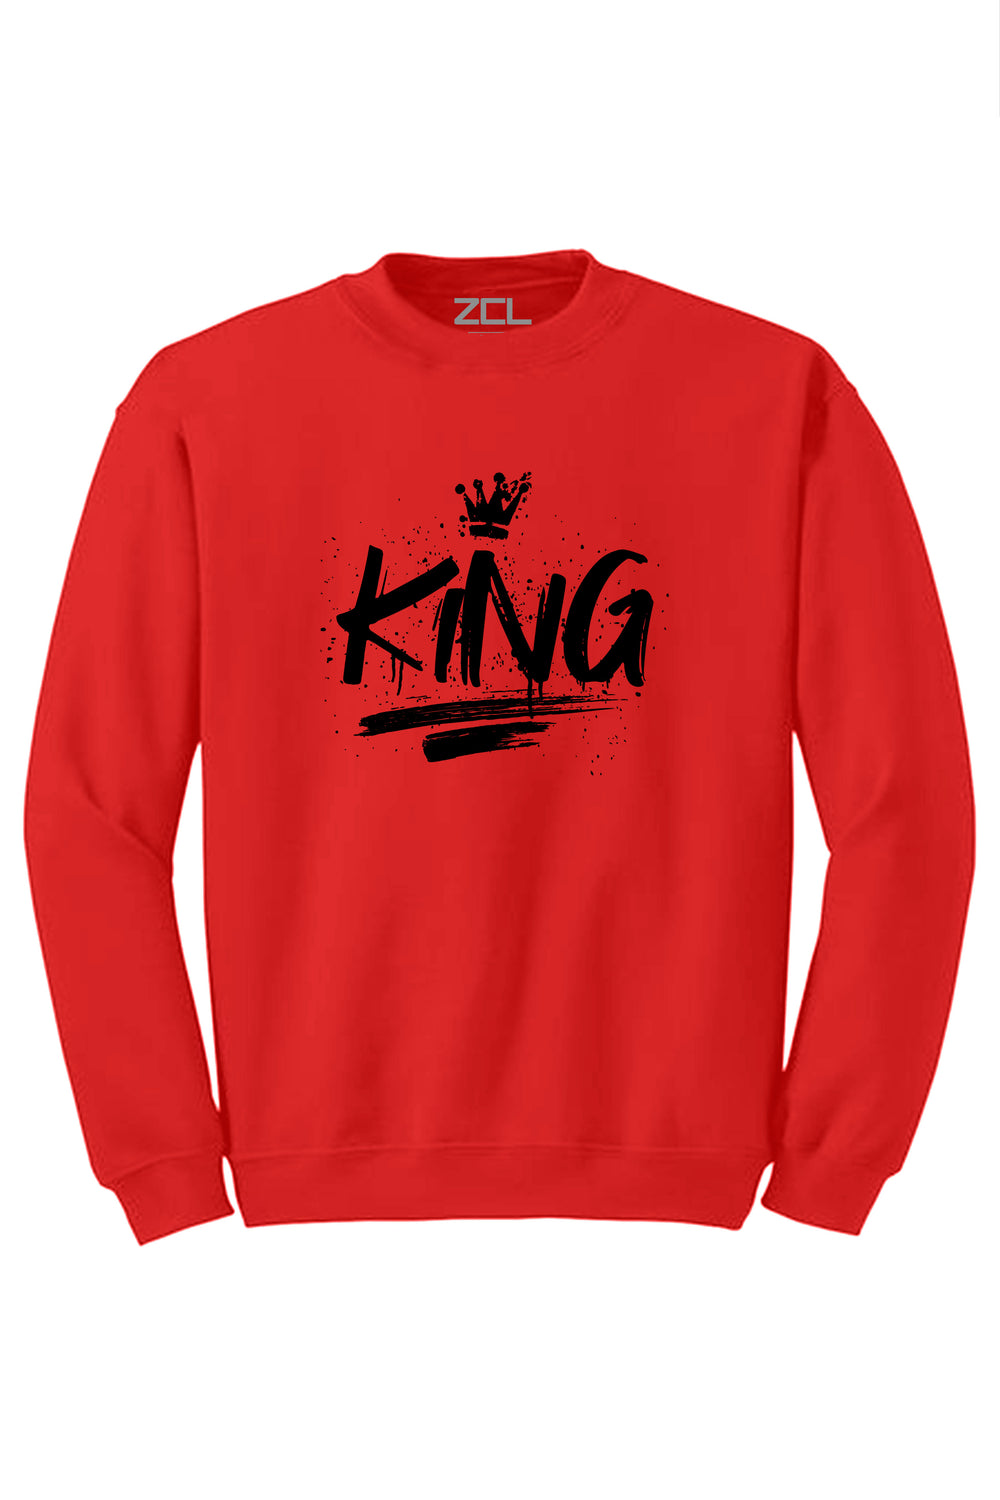 King Crewneck Sweatshirt (Black Logo) - Zamage